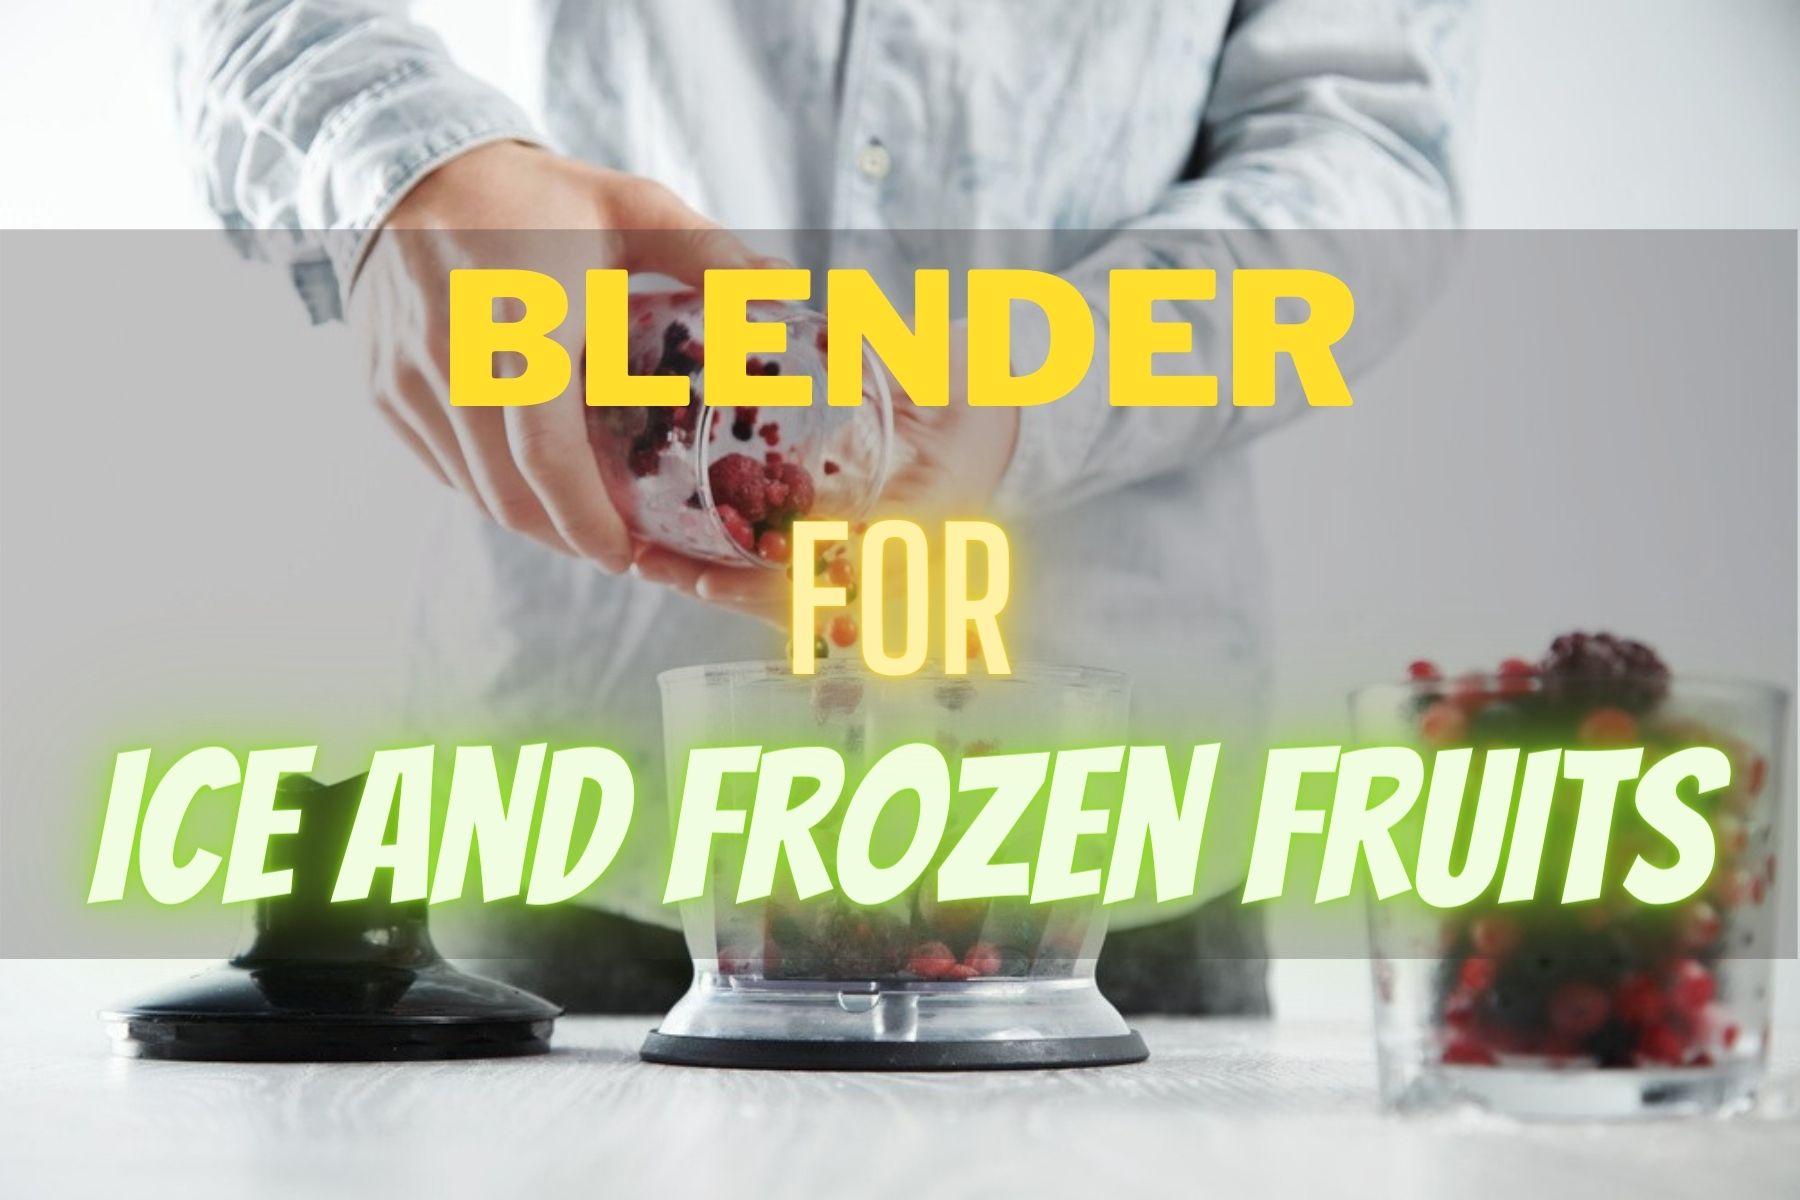 Best Blender For Ice And Frozen Fruit